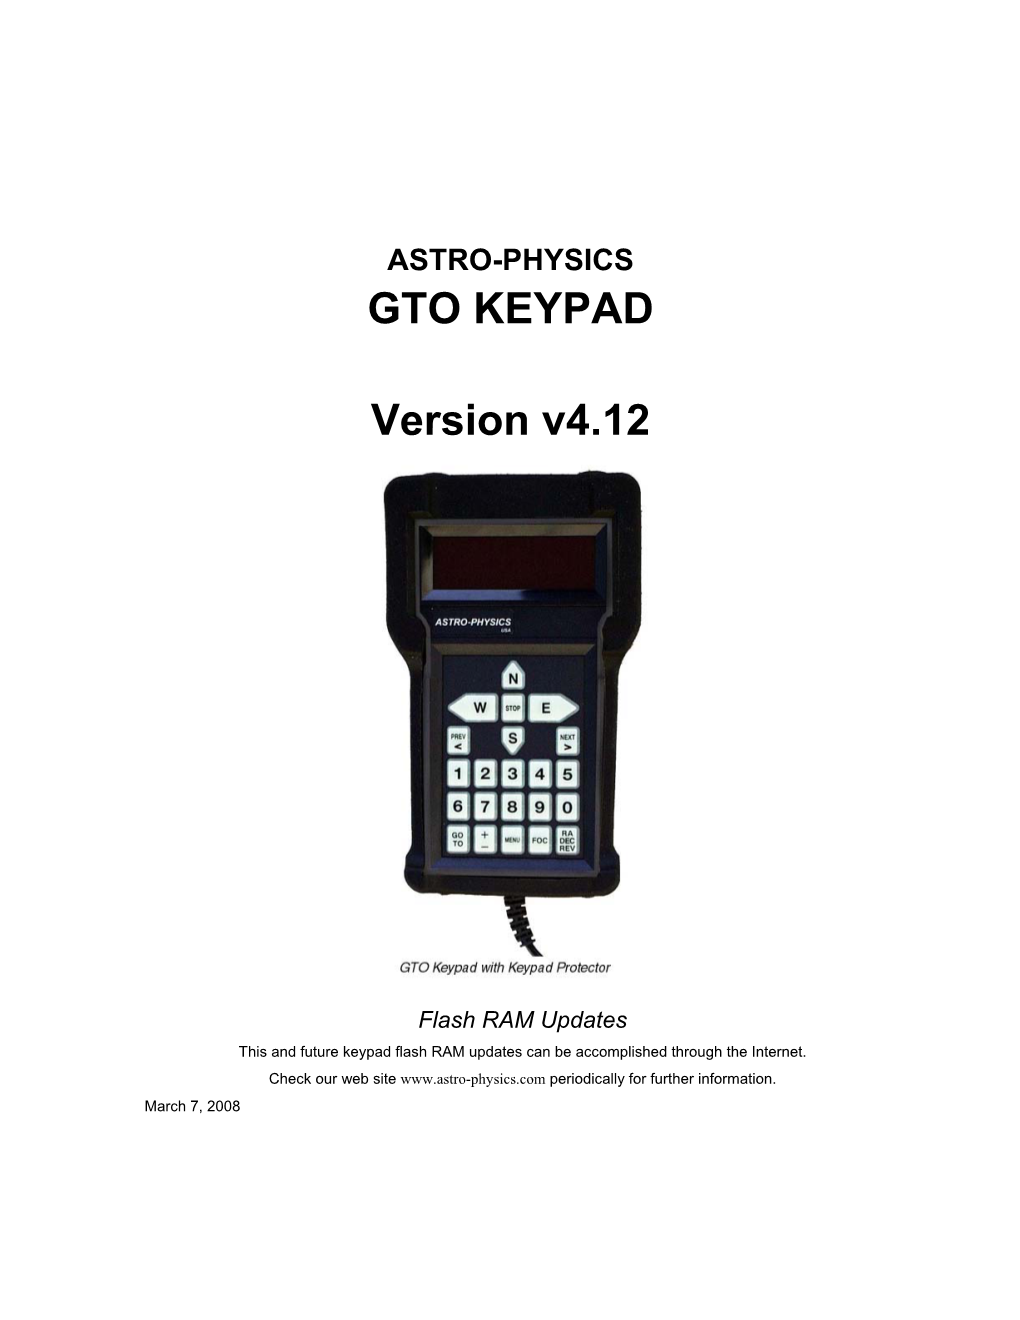 GTO Keypad Controller, Version 4.12